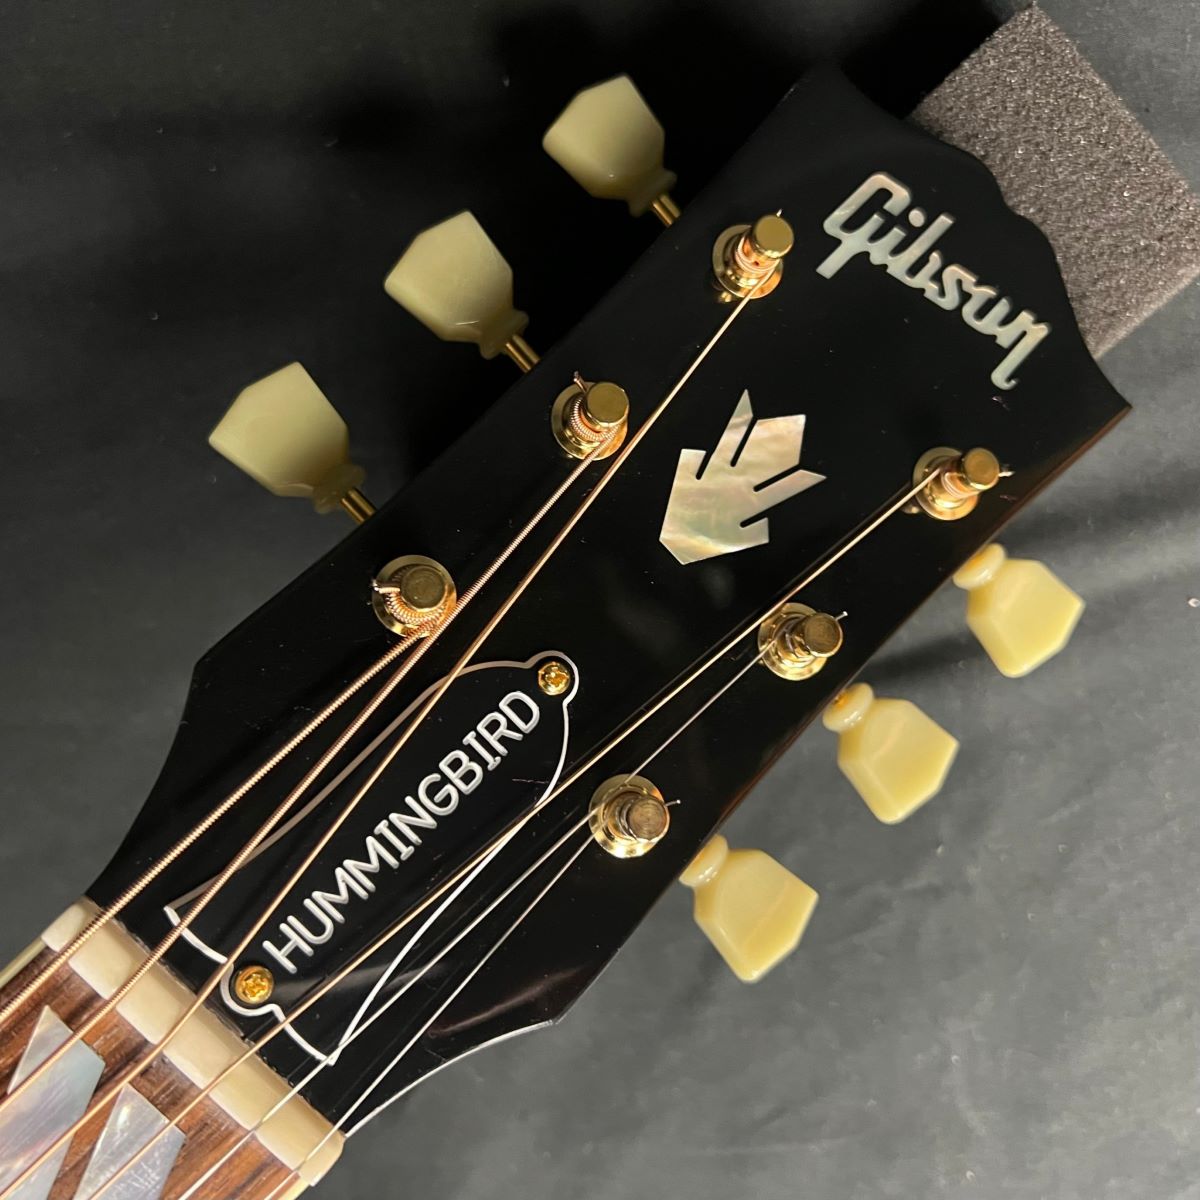 Gibson Hummingbird Original ギブソン 【 横浜ビブレ店 】 | 島村楽器